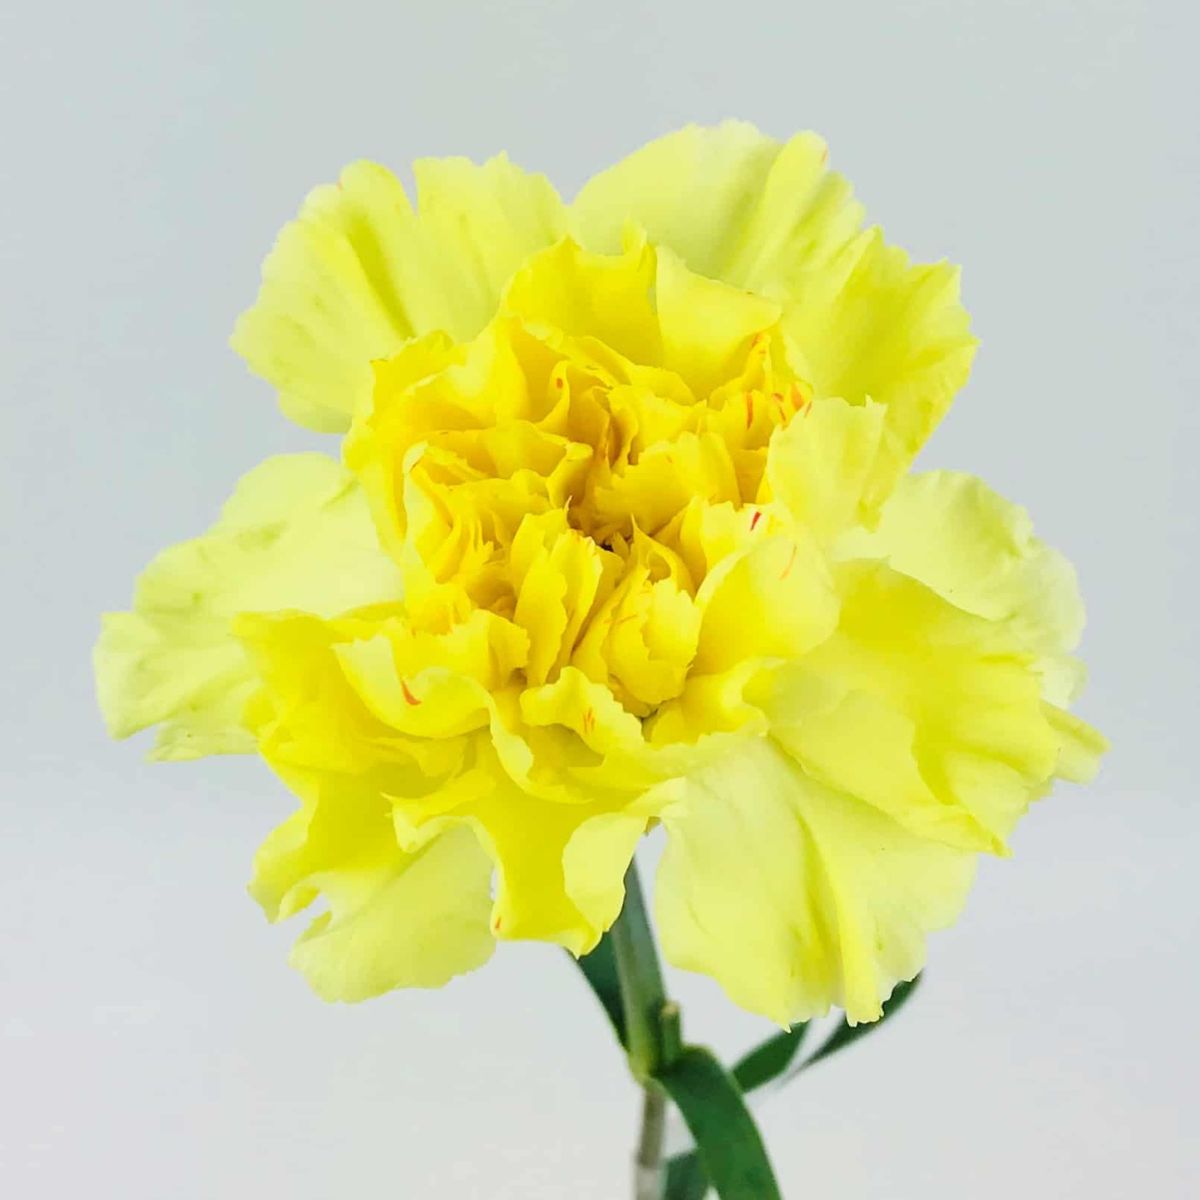 Thea beauty of yellow carnations on Thursd